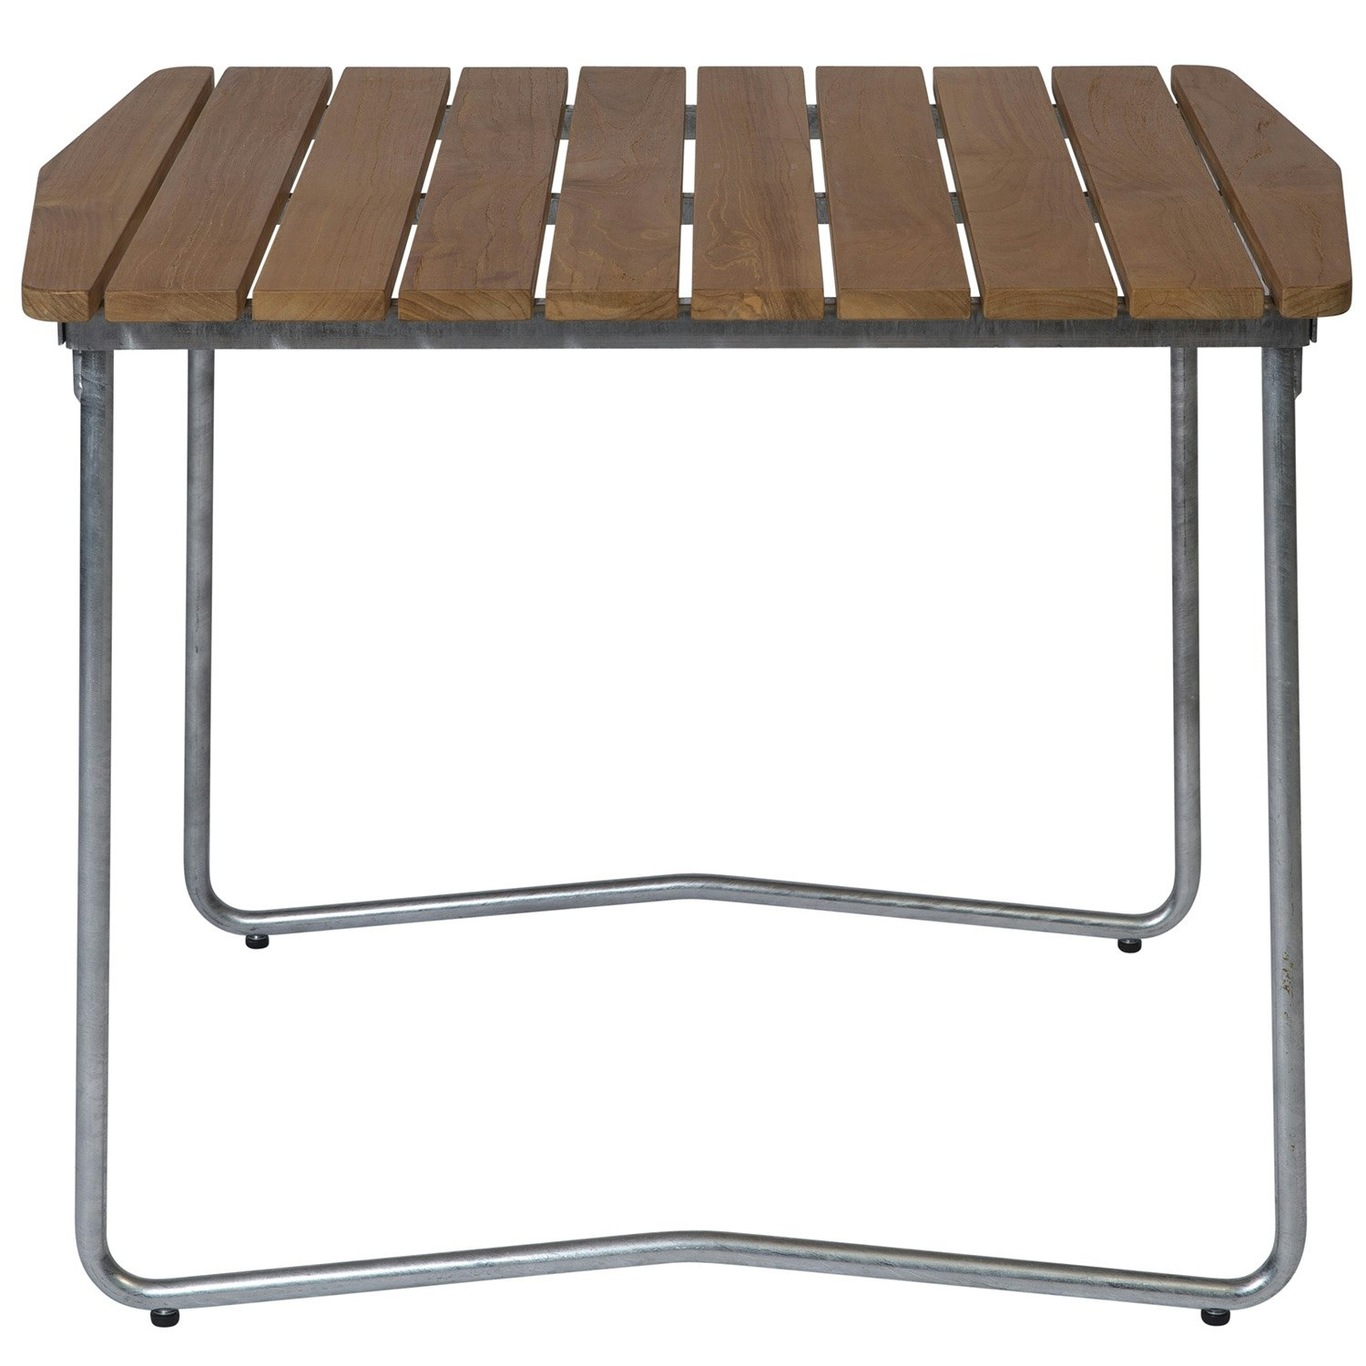 B31 Table 84x92 cm, Untreated Teak / Hot Galvanized Steel